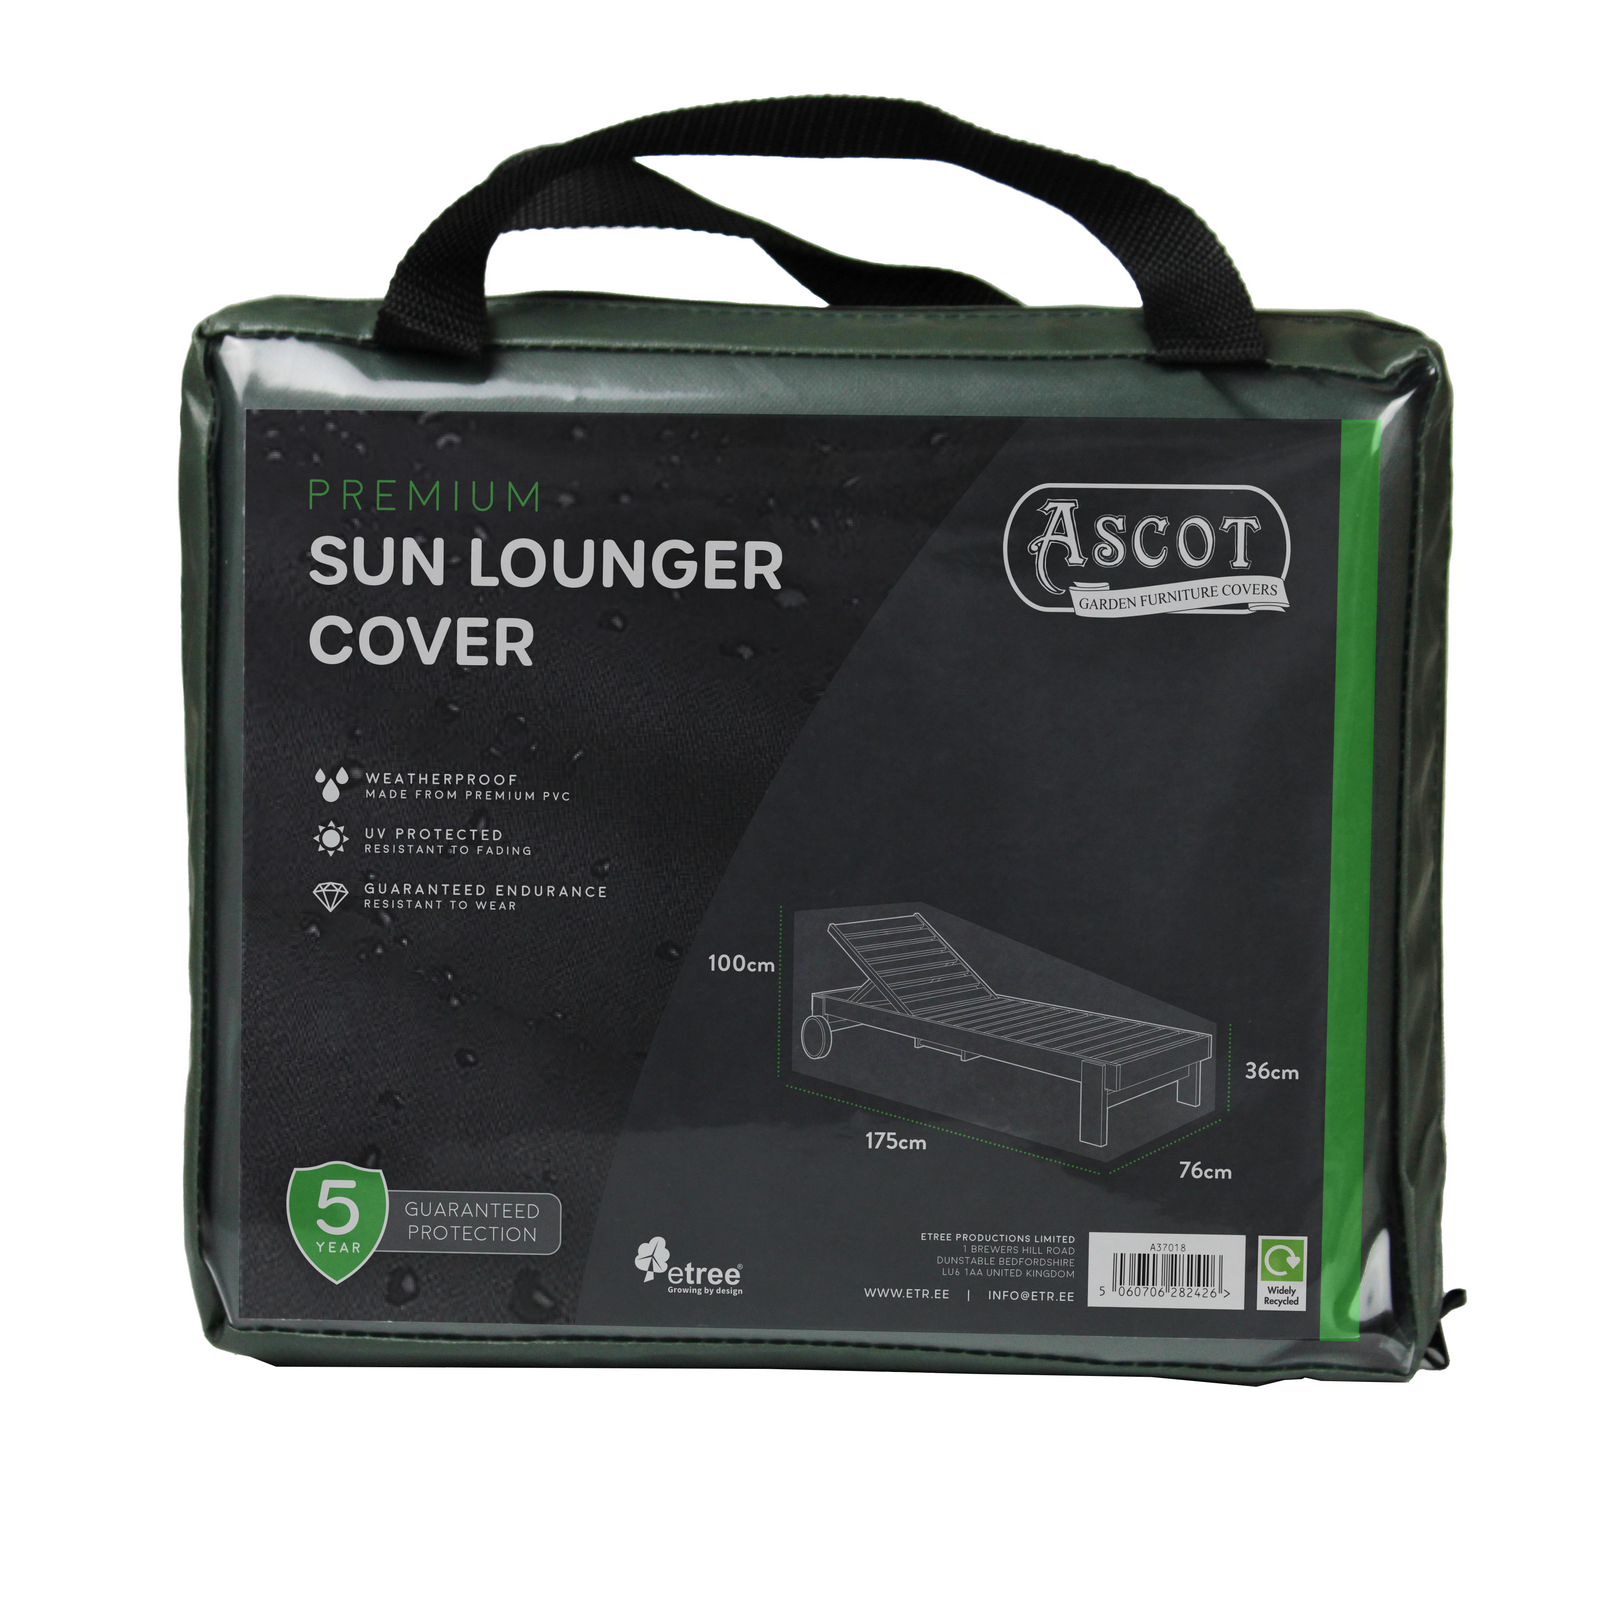 Premium Sun lounger Cover - 76 X 175 X 36/100 (H) cm